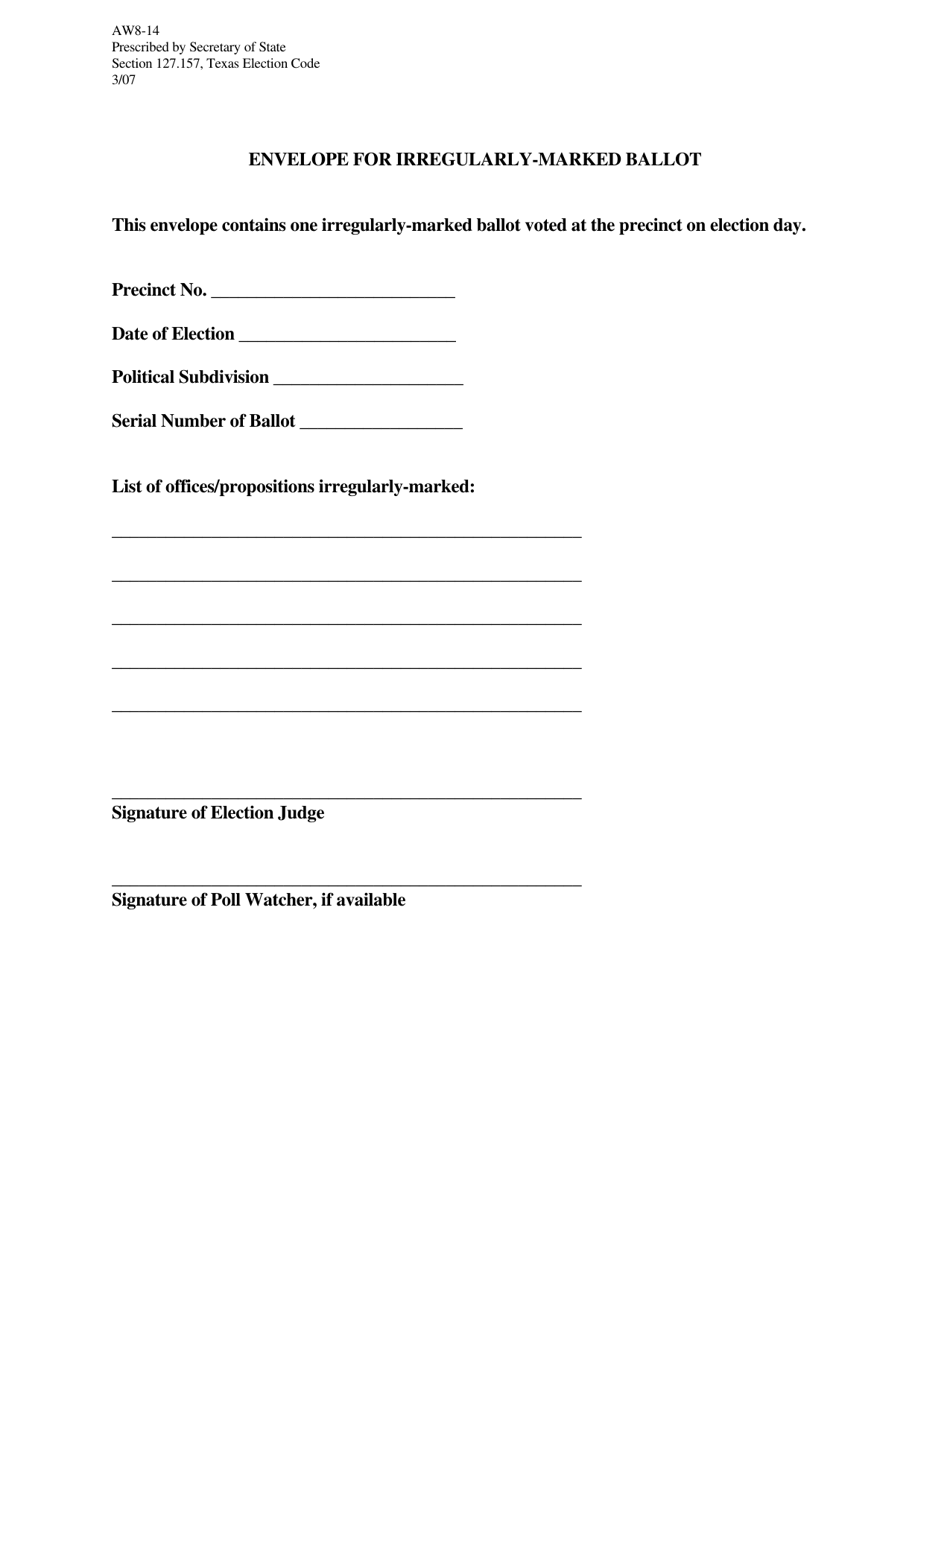 form-aw8-14-download-printable-pdf-or-fill-online-envelope-for